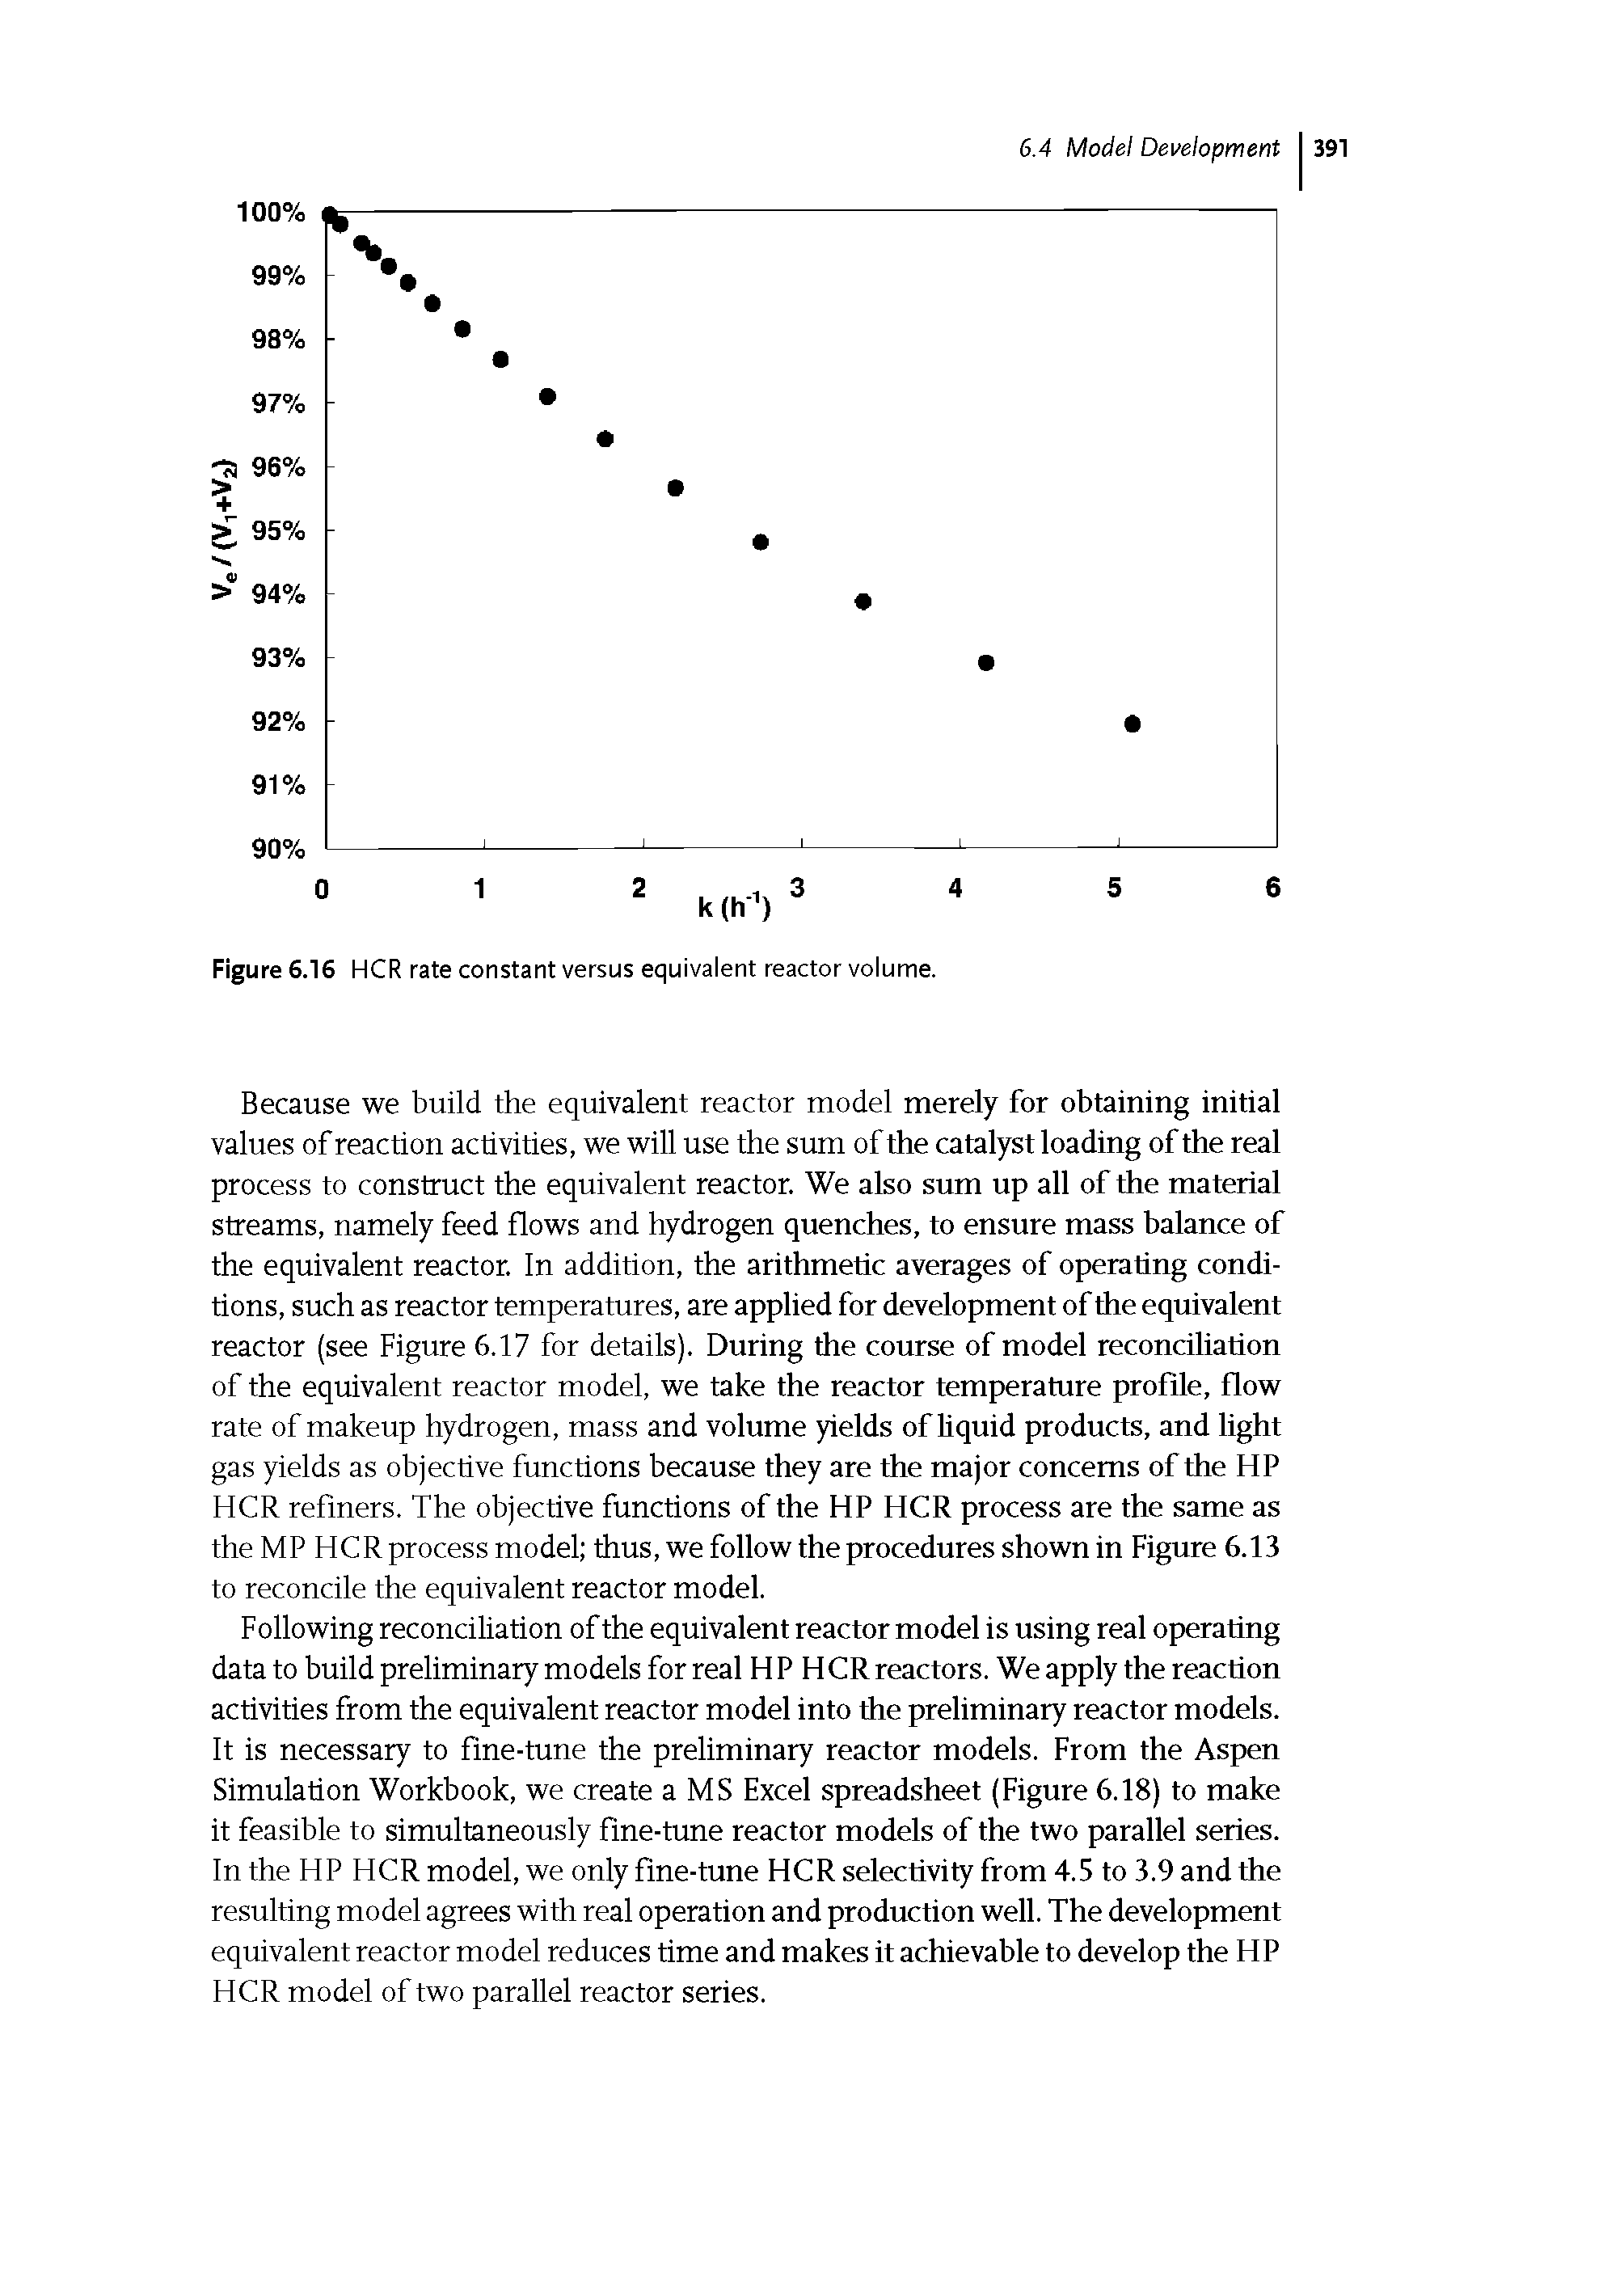 Figure 6.16 HCR rate constant versus equivalent reactor volume.